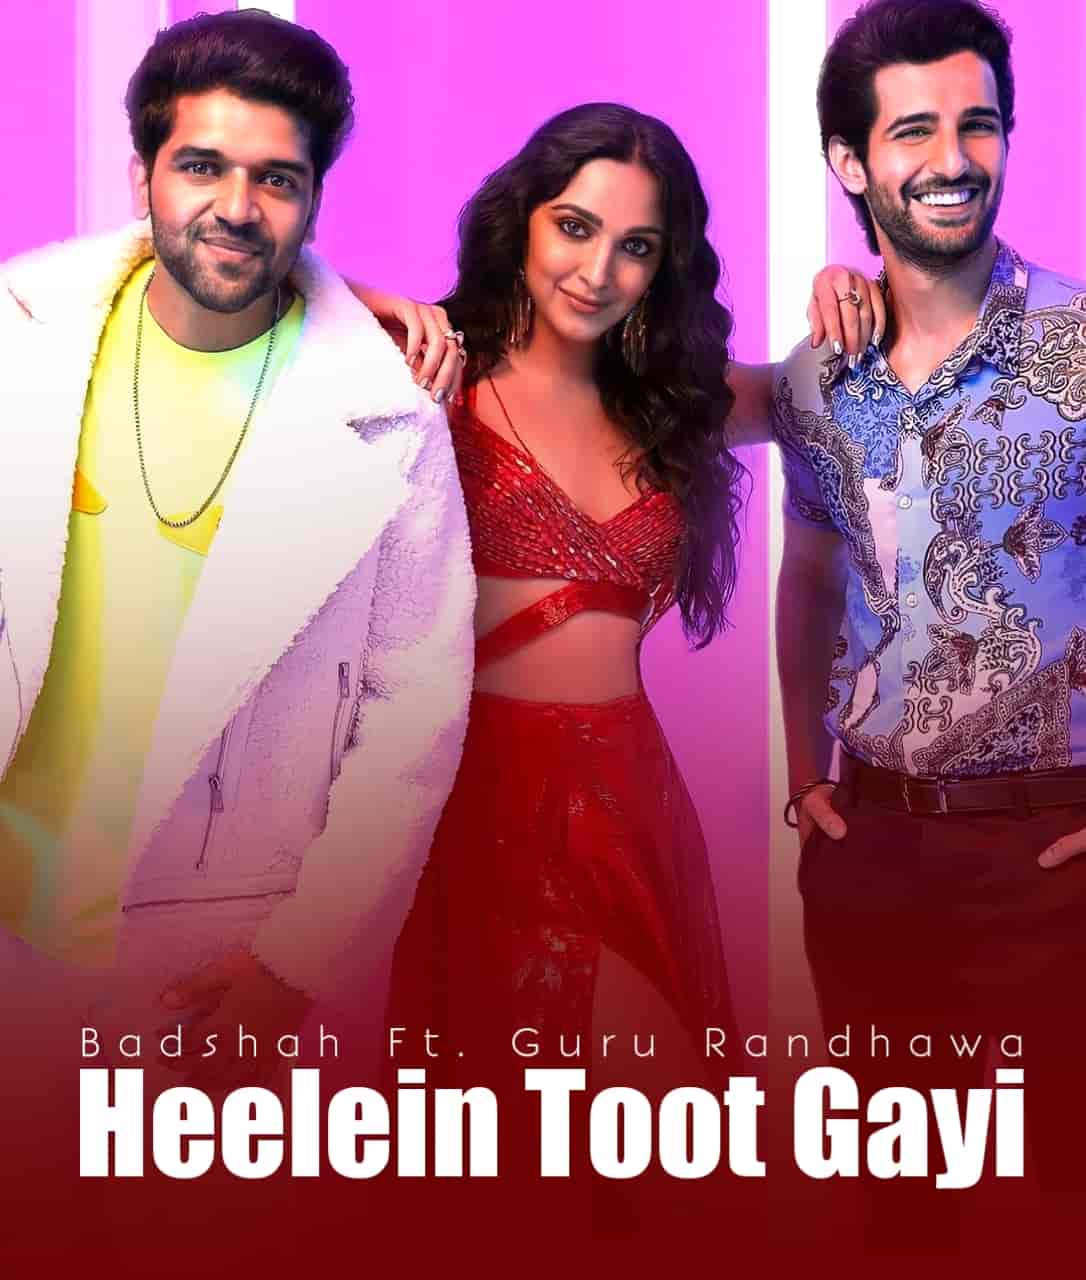 Heelein Toot Gayi Song Image Features Guru Randhawa, Kiara Advani and Badshah